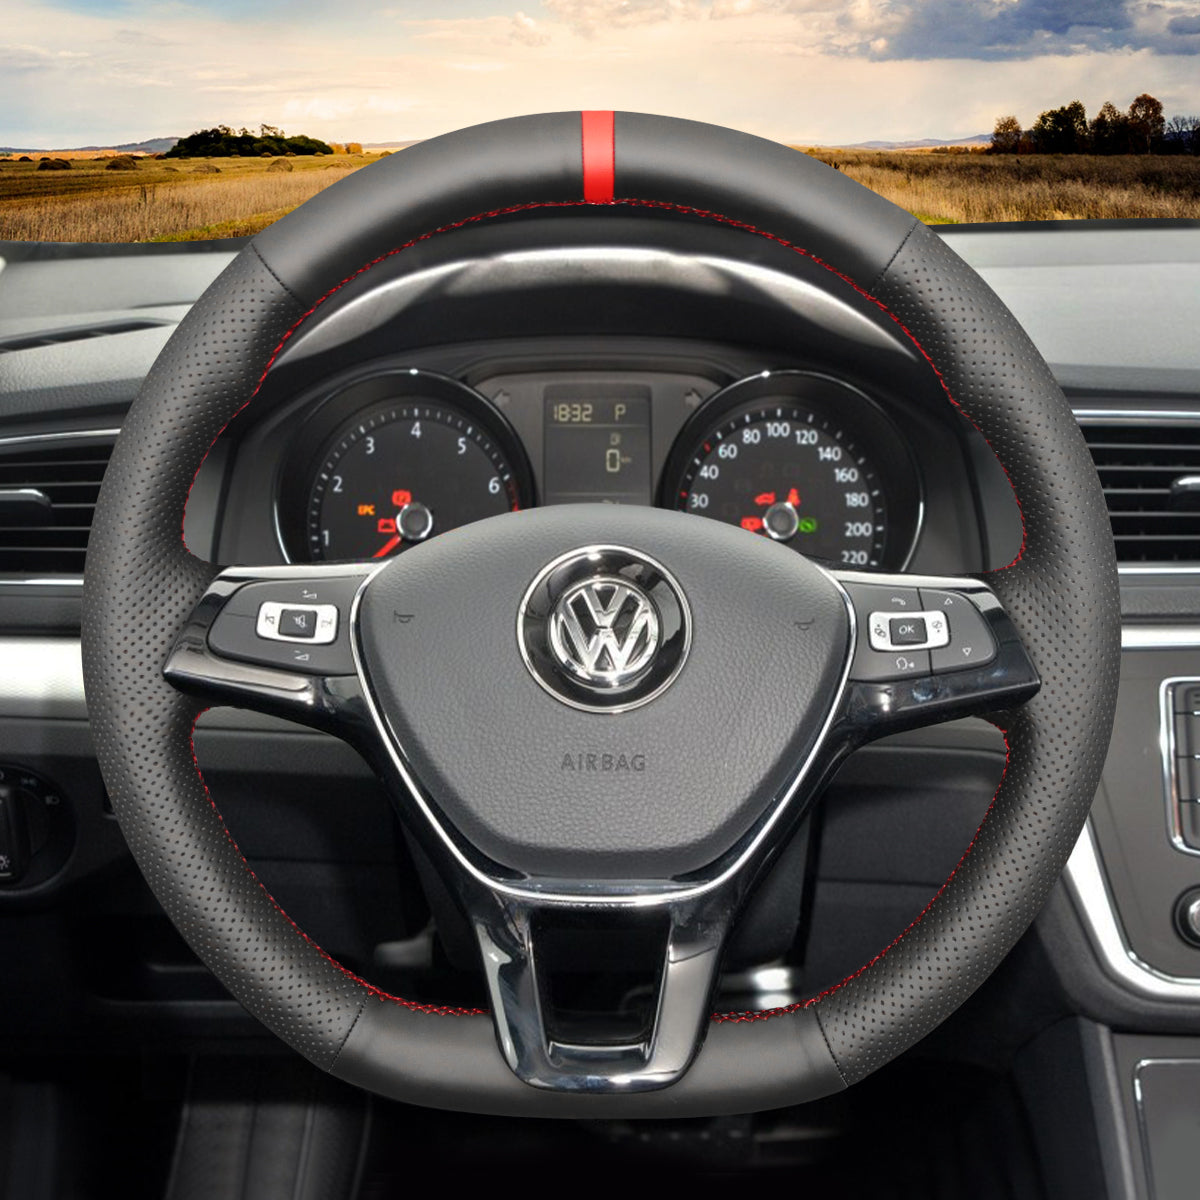 Car steering wheel cover for Volkswagen VW Golf 7 2015-2021 / Golf Alltrack 2017-2019 / Golf SportWagen 2015-2019 / Jetta 2015-2021 / Passat 2016-2020 / Tiguan 2018-2021 / e-Golf 2015-2019 / Arteon 2019-2020 / Atlas 2018-2019